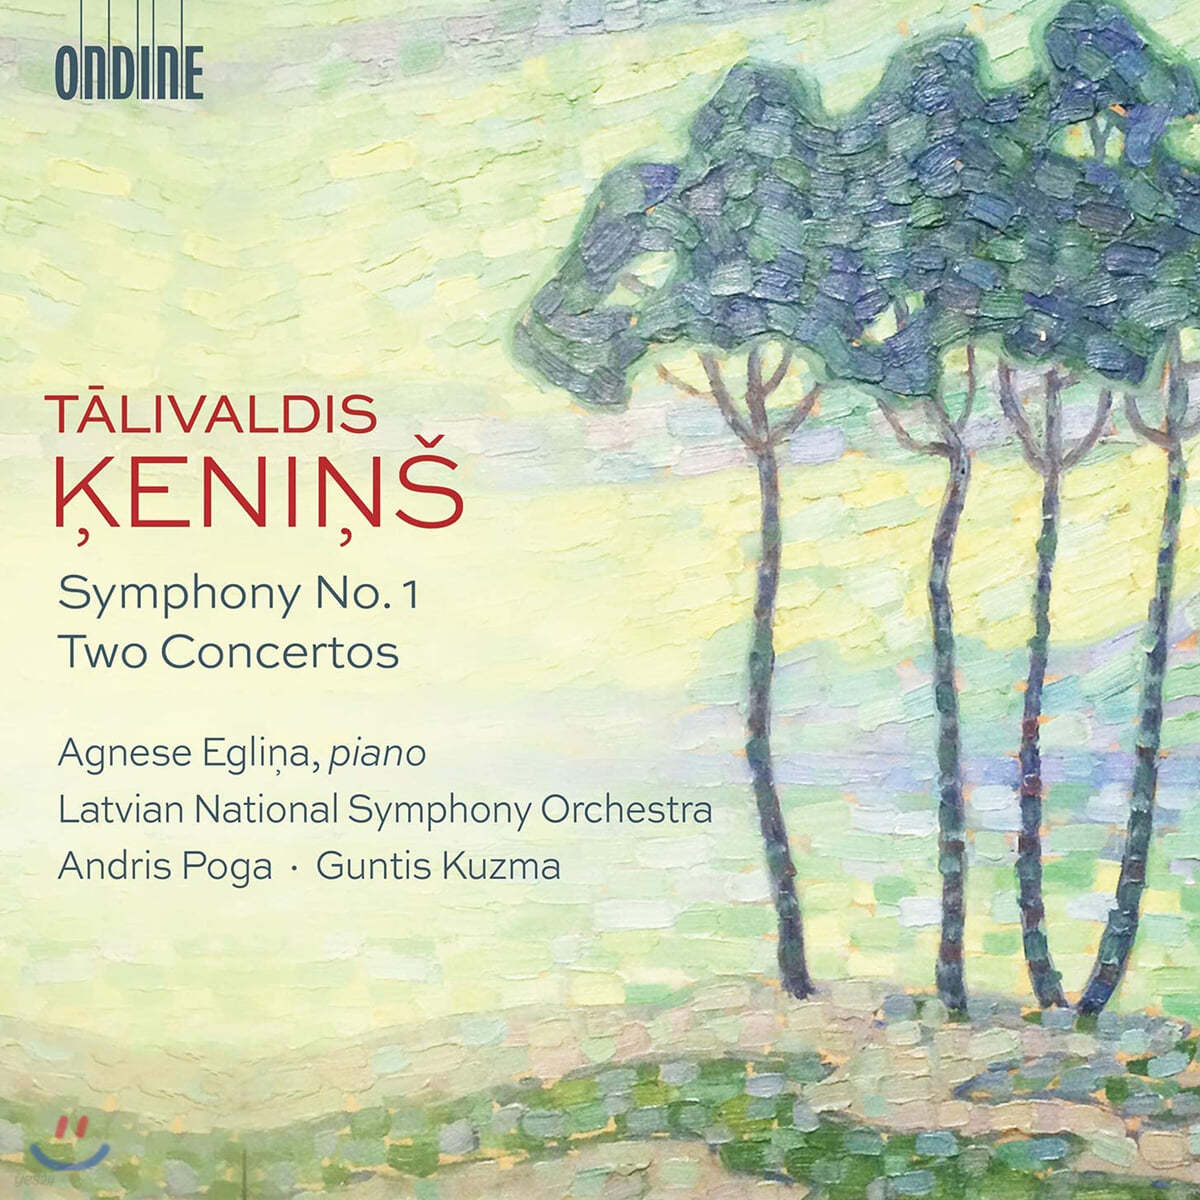 Andris Poga 탈리발디스 케니니시: 교향곡 1번, 실내협주곡 1번, 피아노와 현, 타악기를 위한 협주곡 (Talivaldis Kenins: Symphony No.1, Two Concertos) 